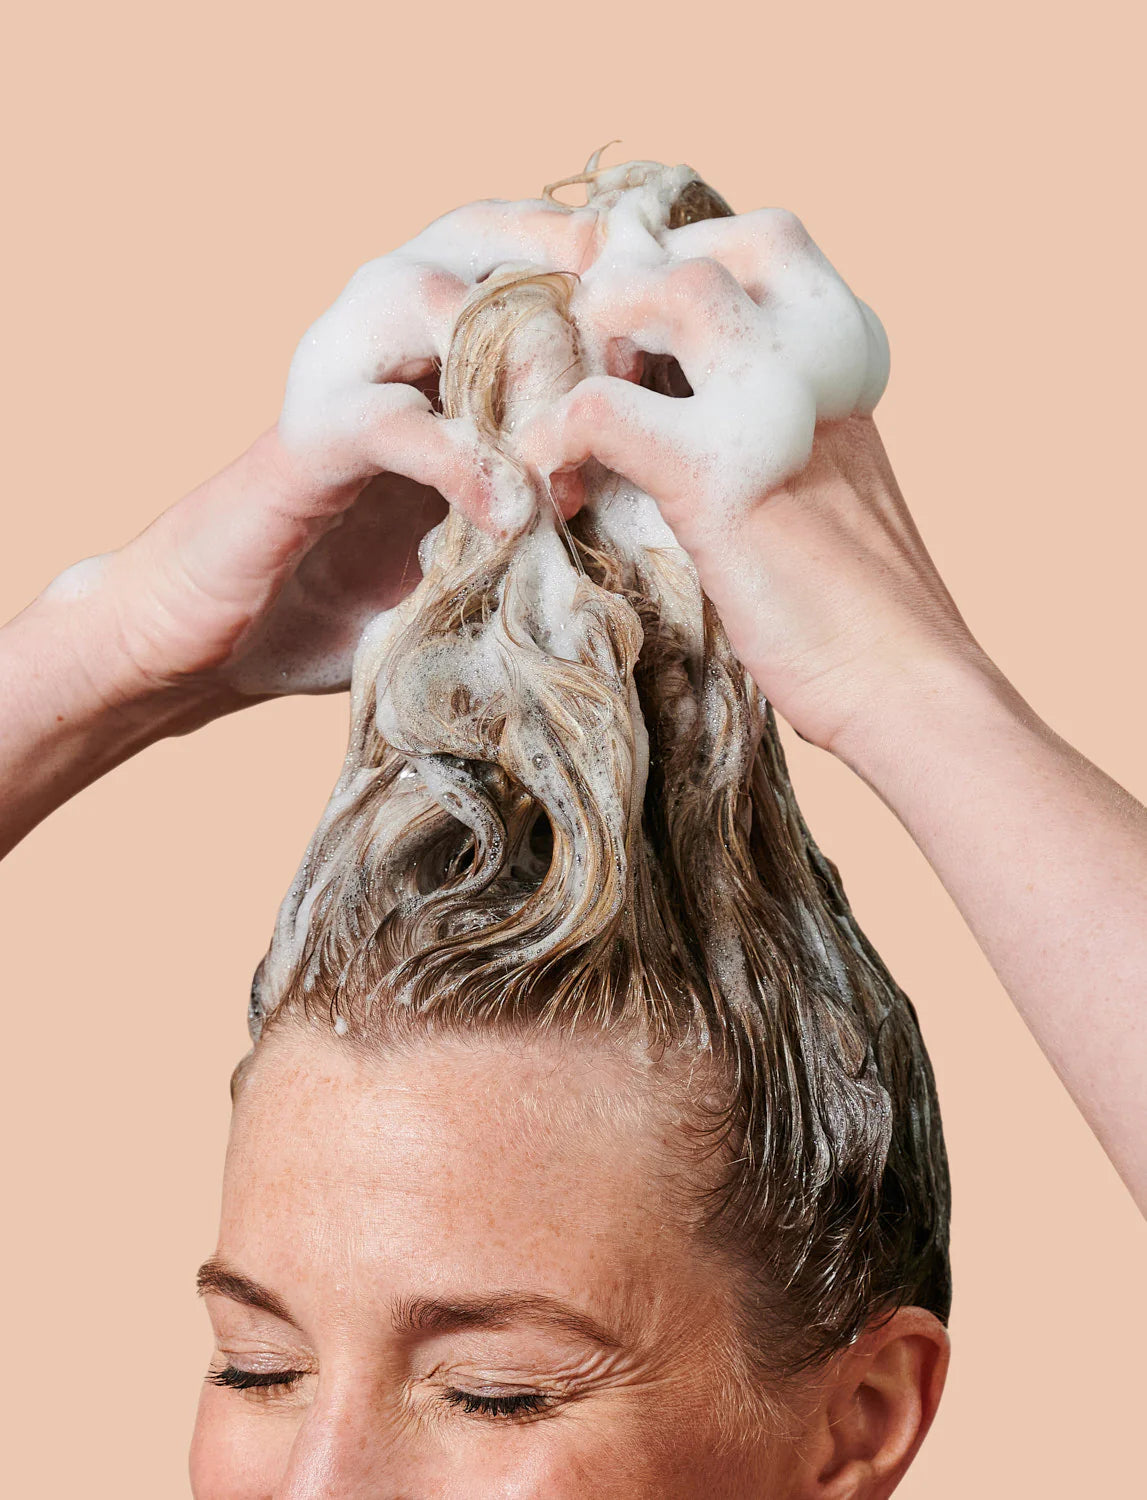 Under Luna - Grounded Shampoo: supports a balanced scalp